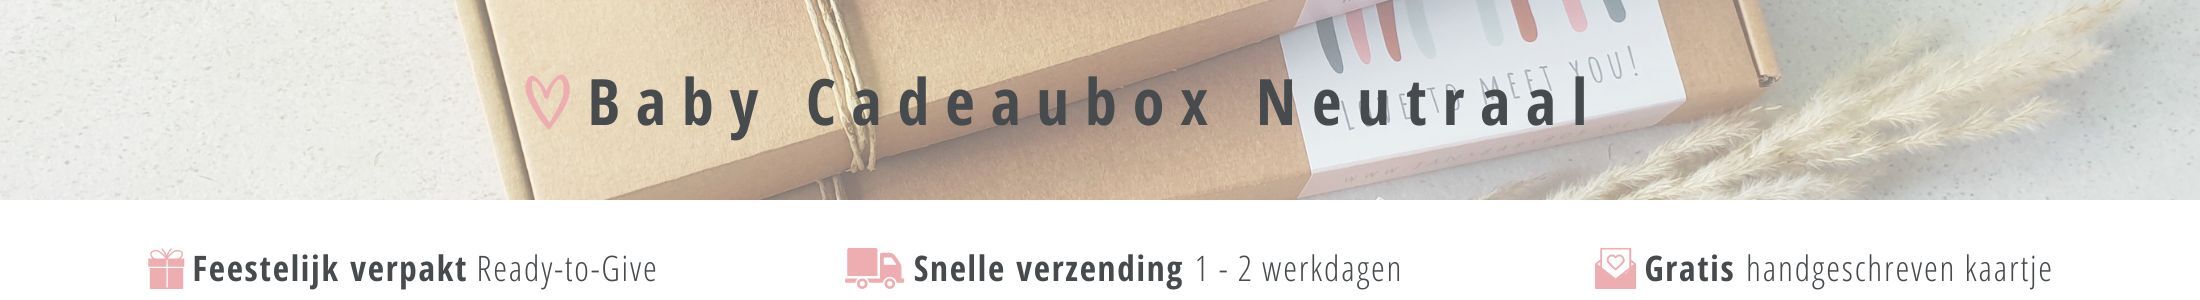 Jans Babybox - Baby Cadeauboxen Neutraal